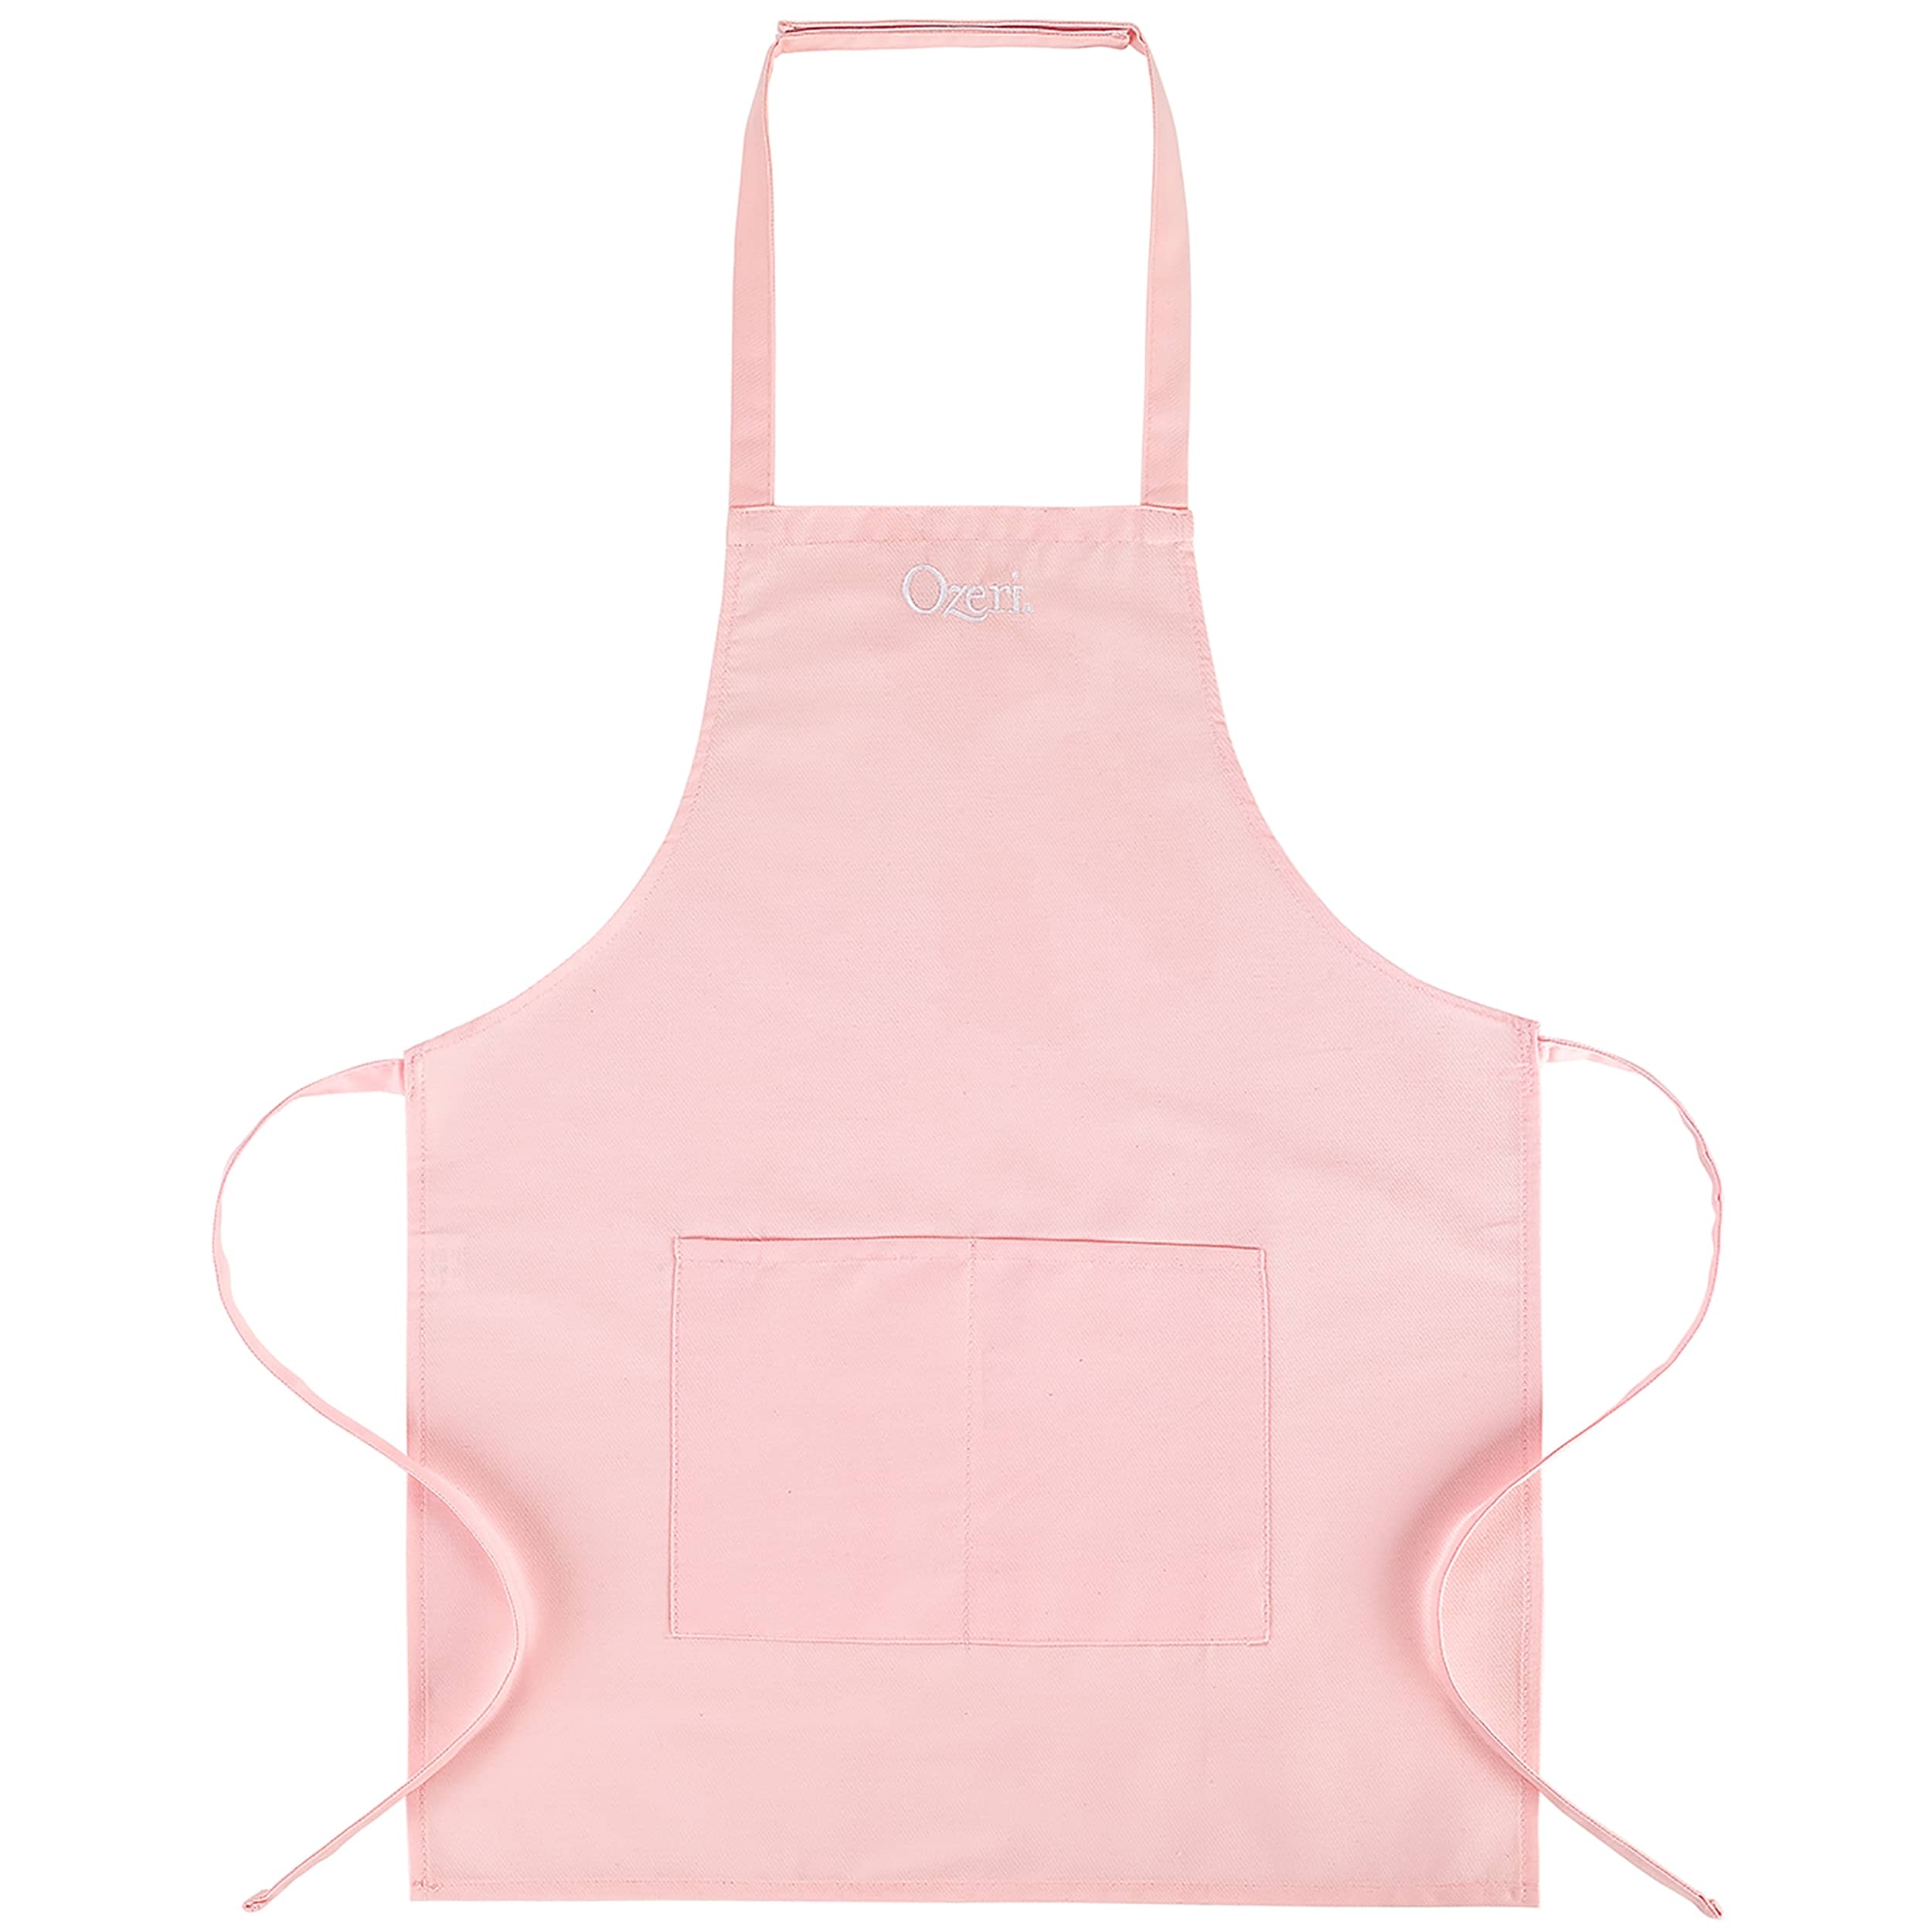 Ozeri Junior Chef Pink Cooking Essentials Set for Kids